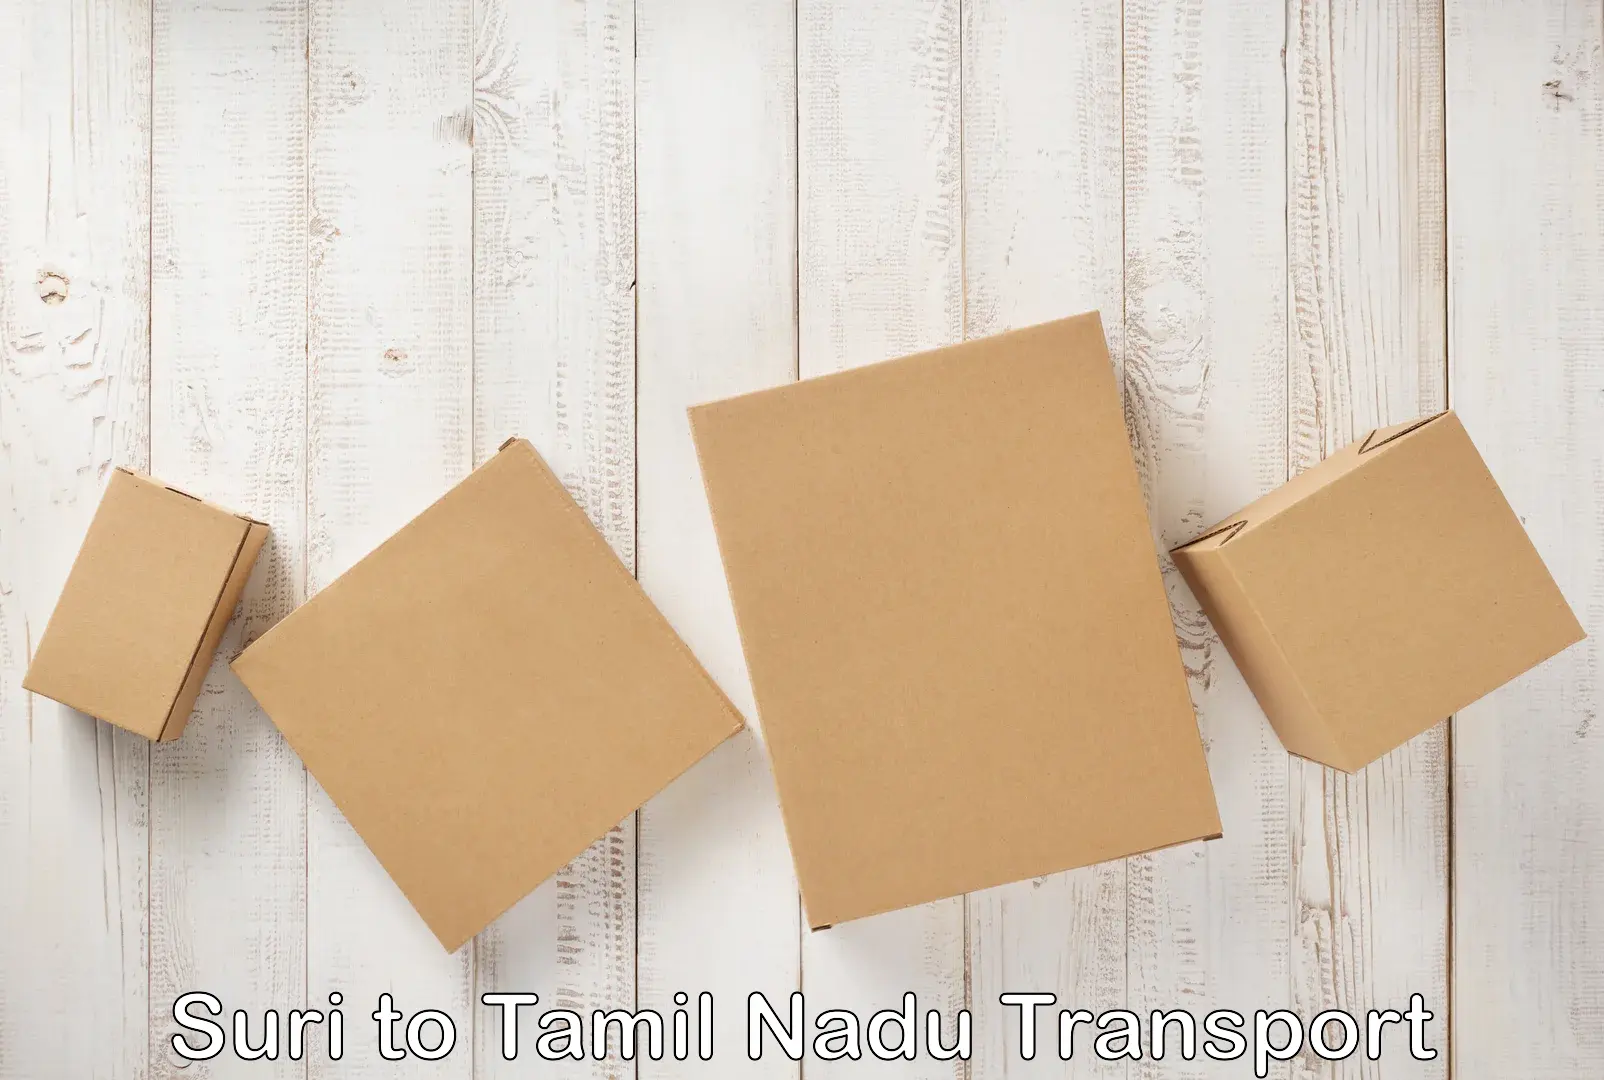 Online transport service Suri to Tamil Nadu